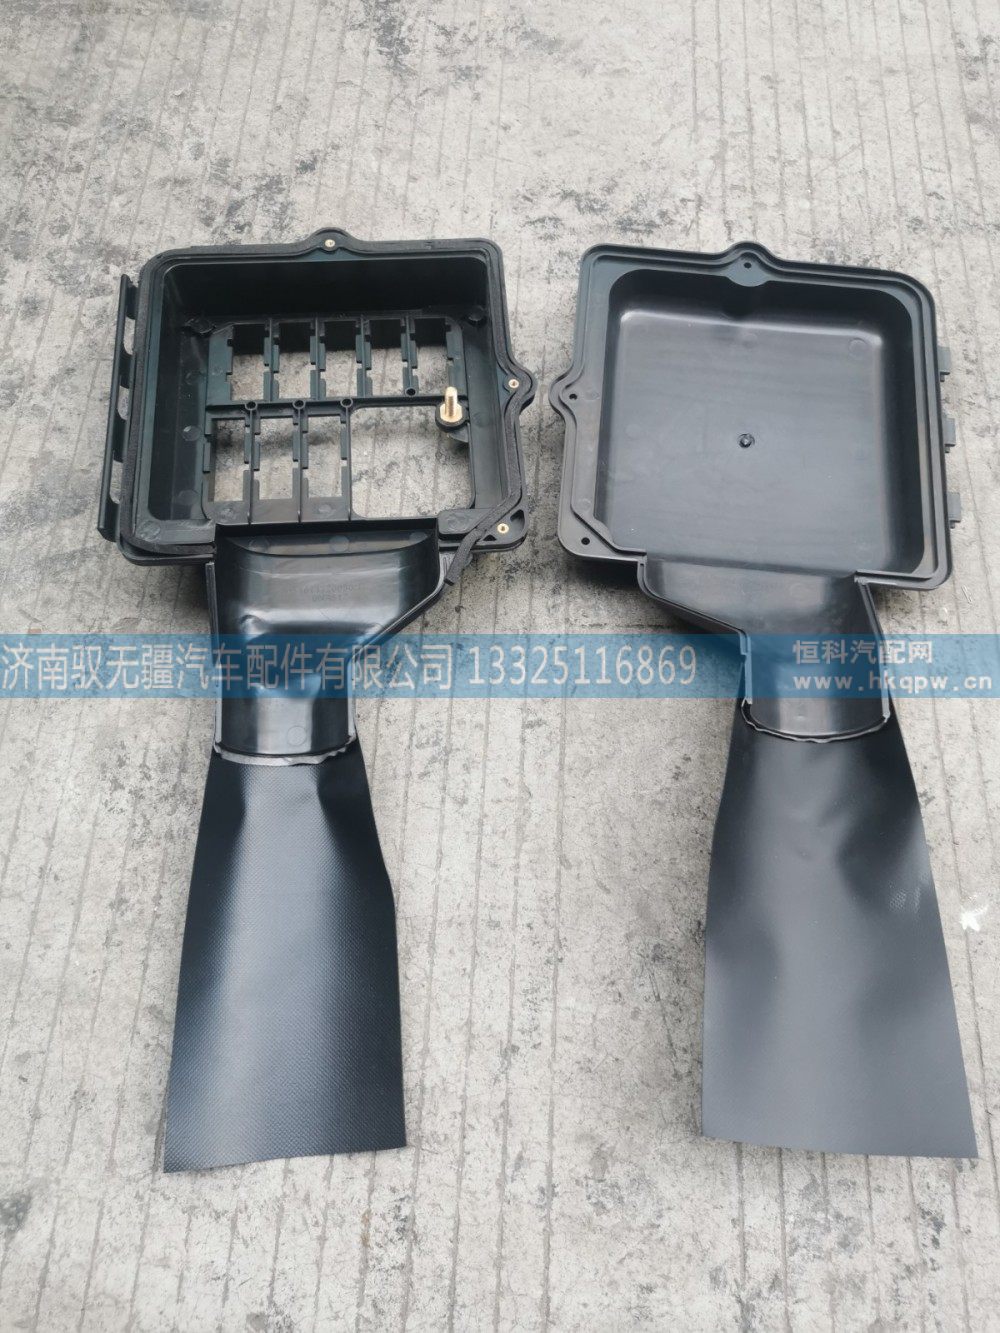 WG9525580301,电气接线盒,济南驭无疆汽车配件有限公司